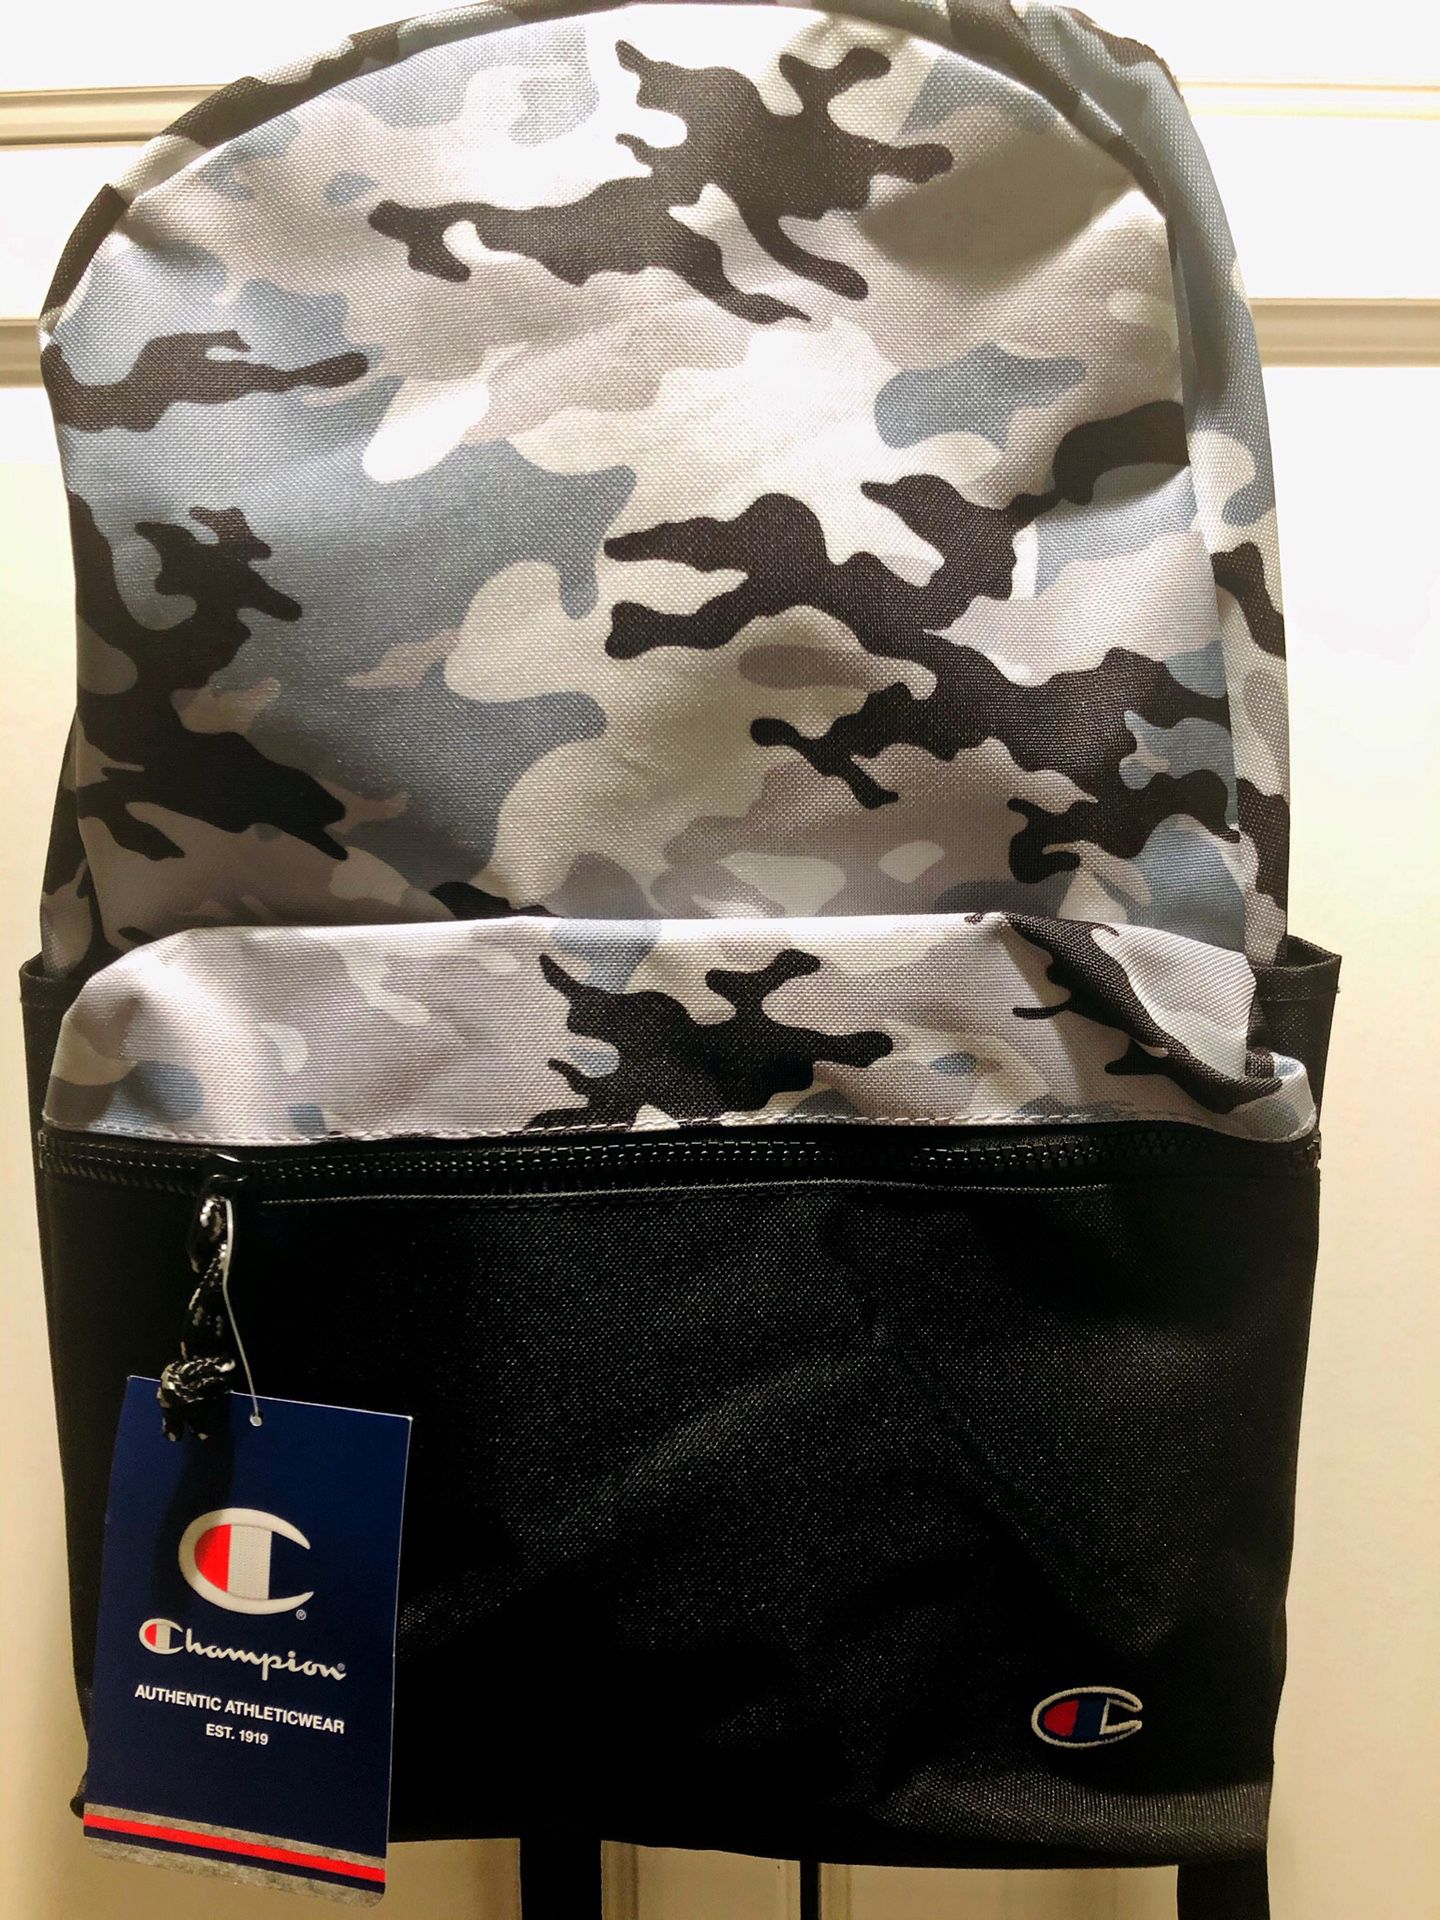 New Champion Black/Camo Backpack.